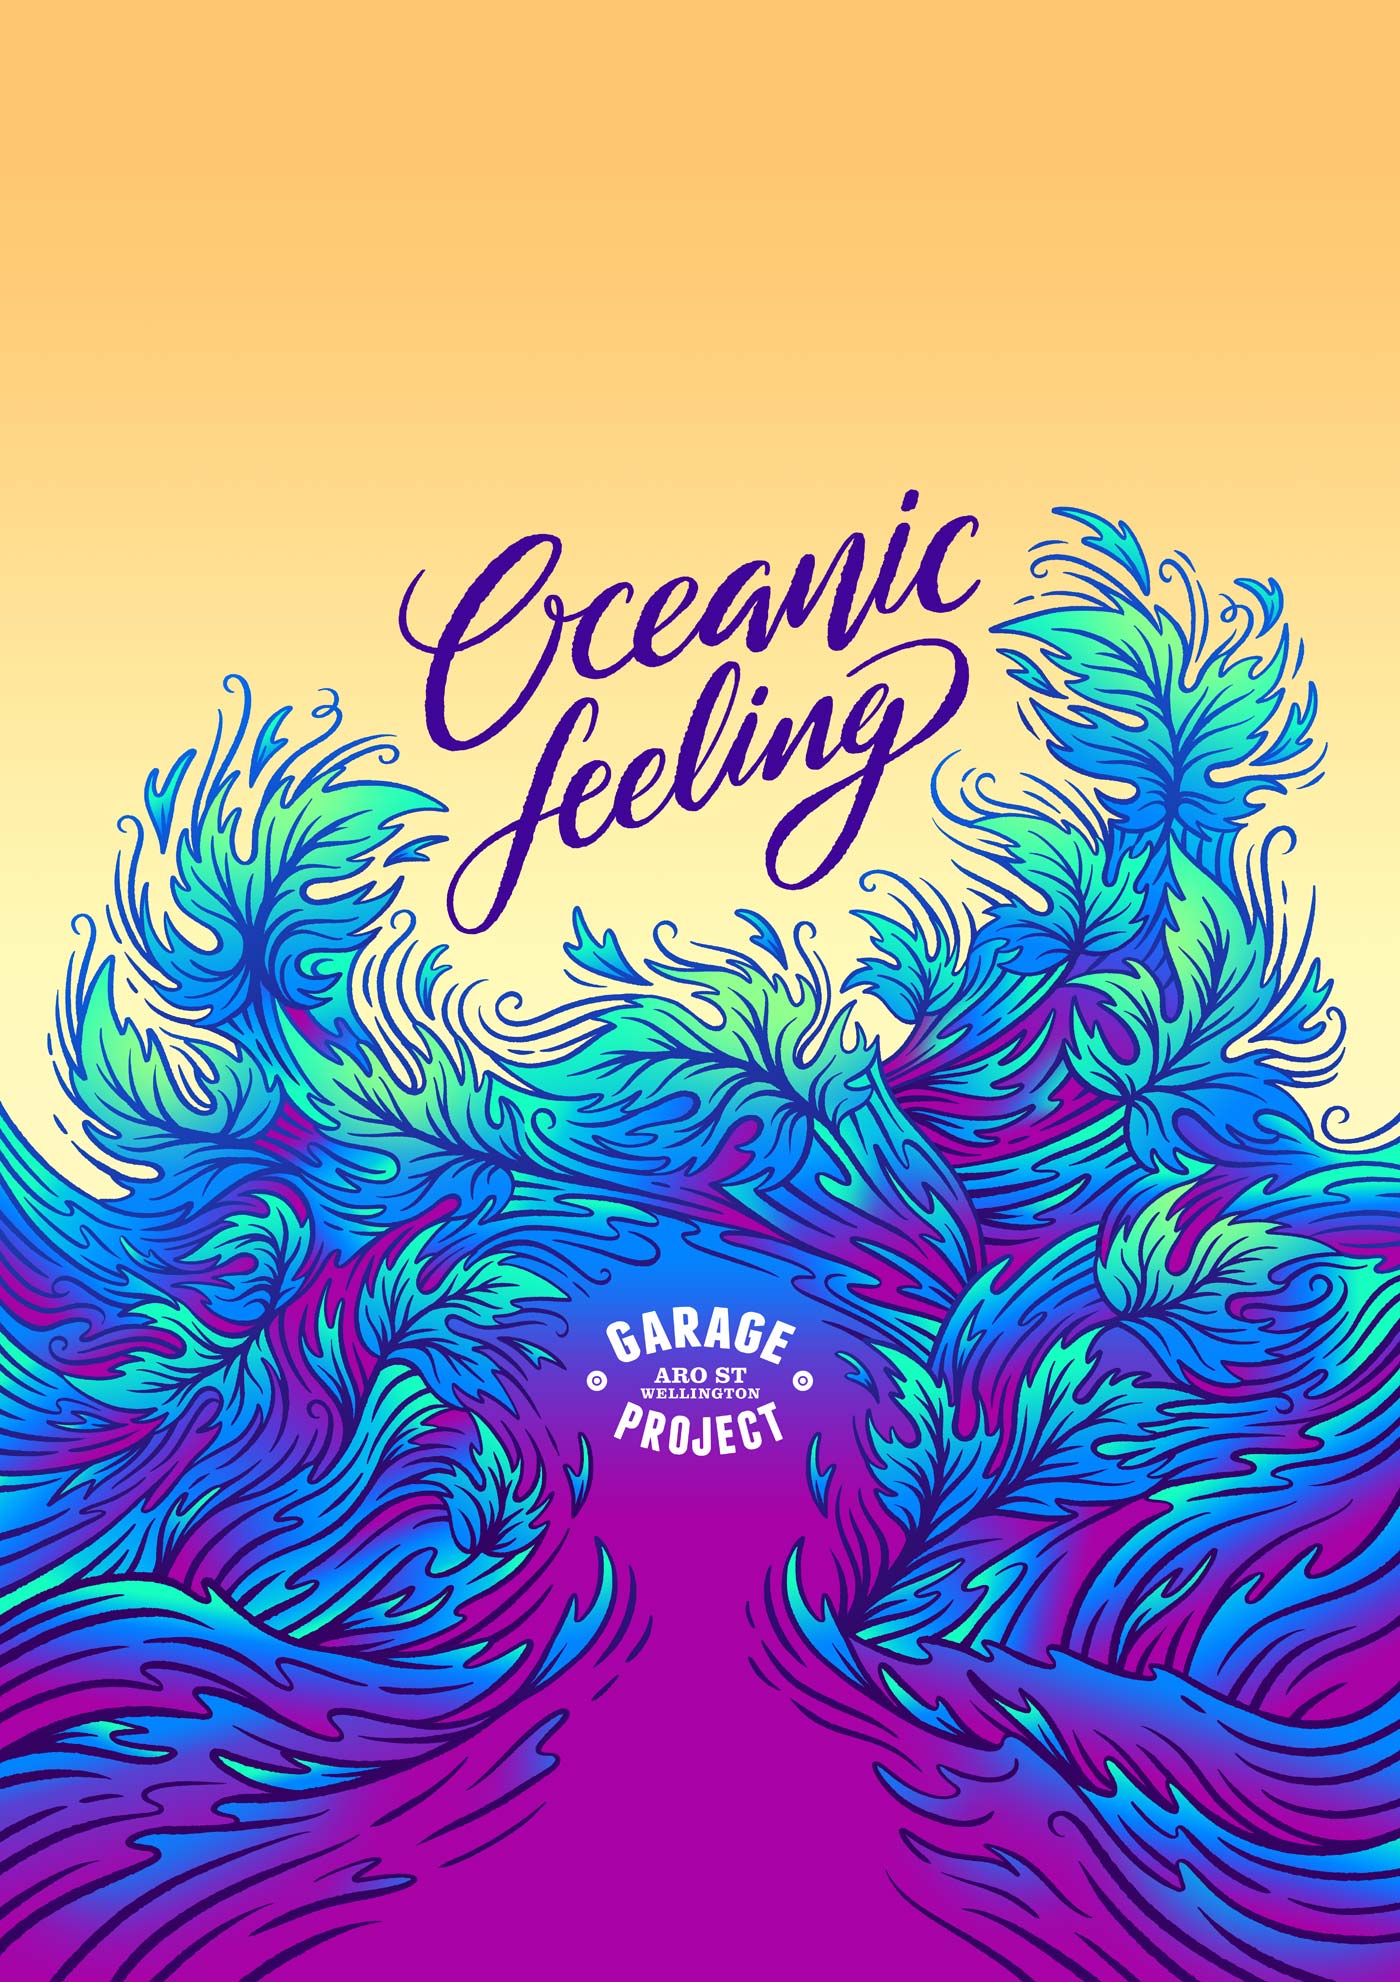 Oceanic Feeling Garage Project wine poster artwork illustration by Andrea Muller